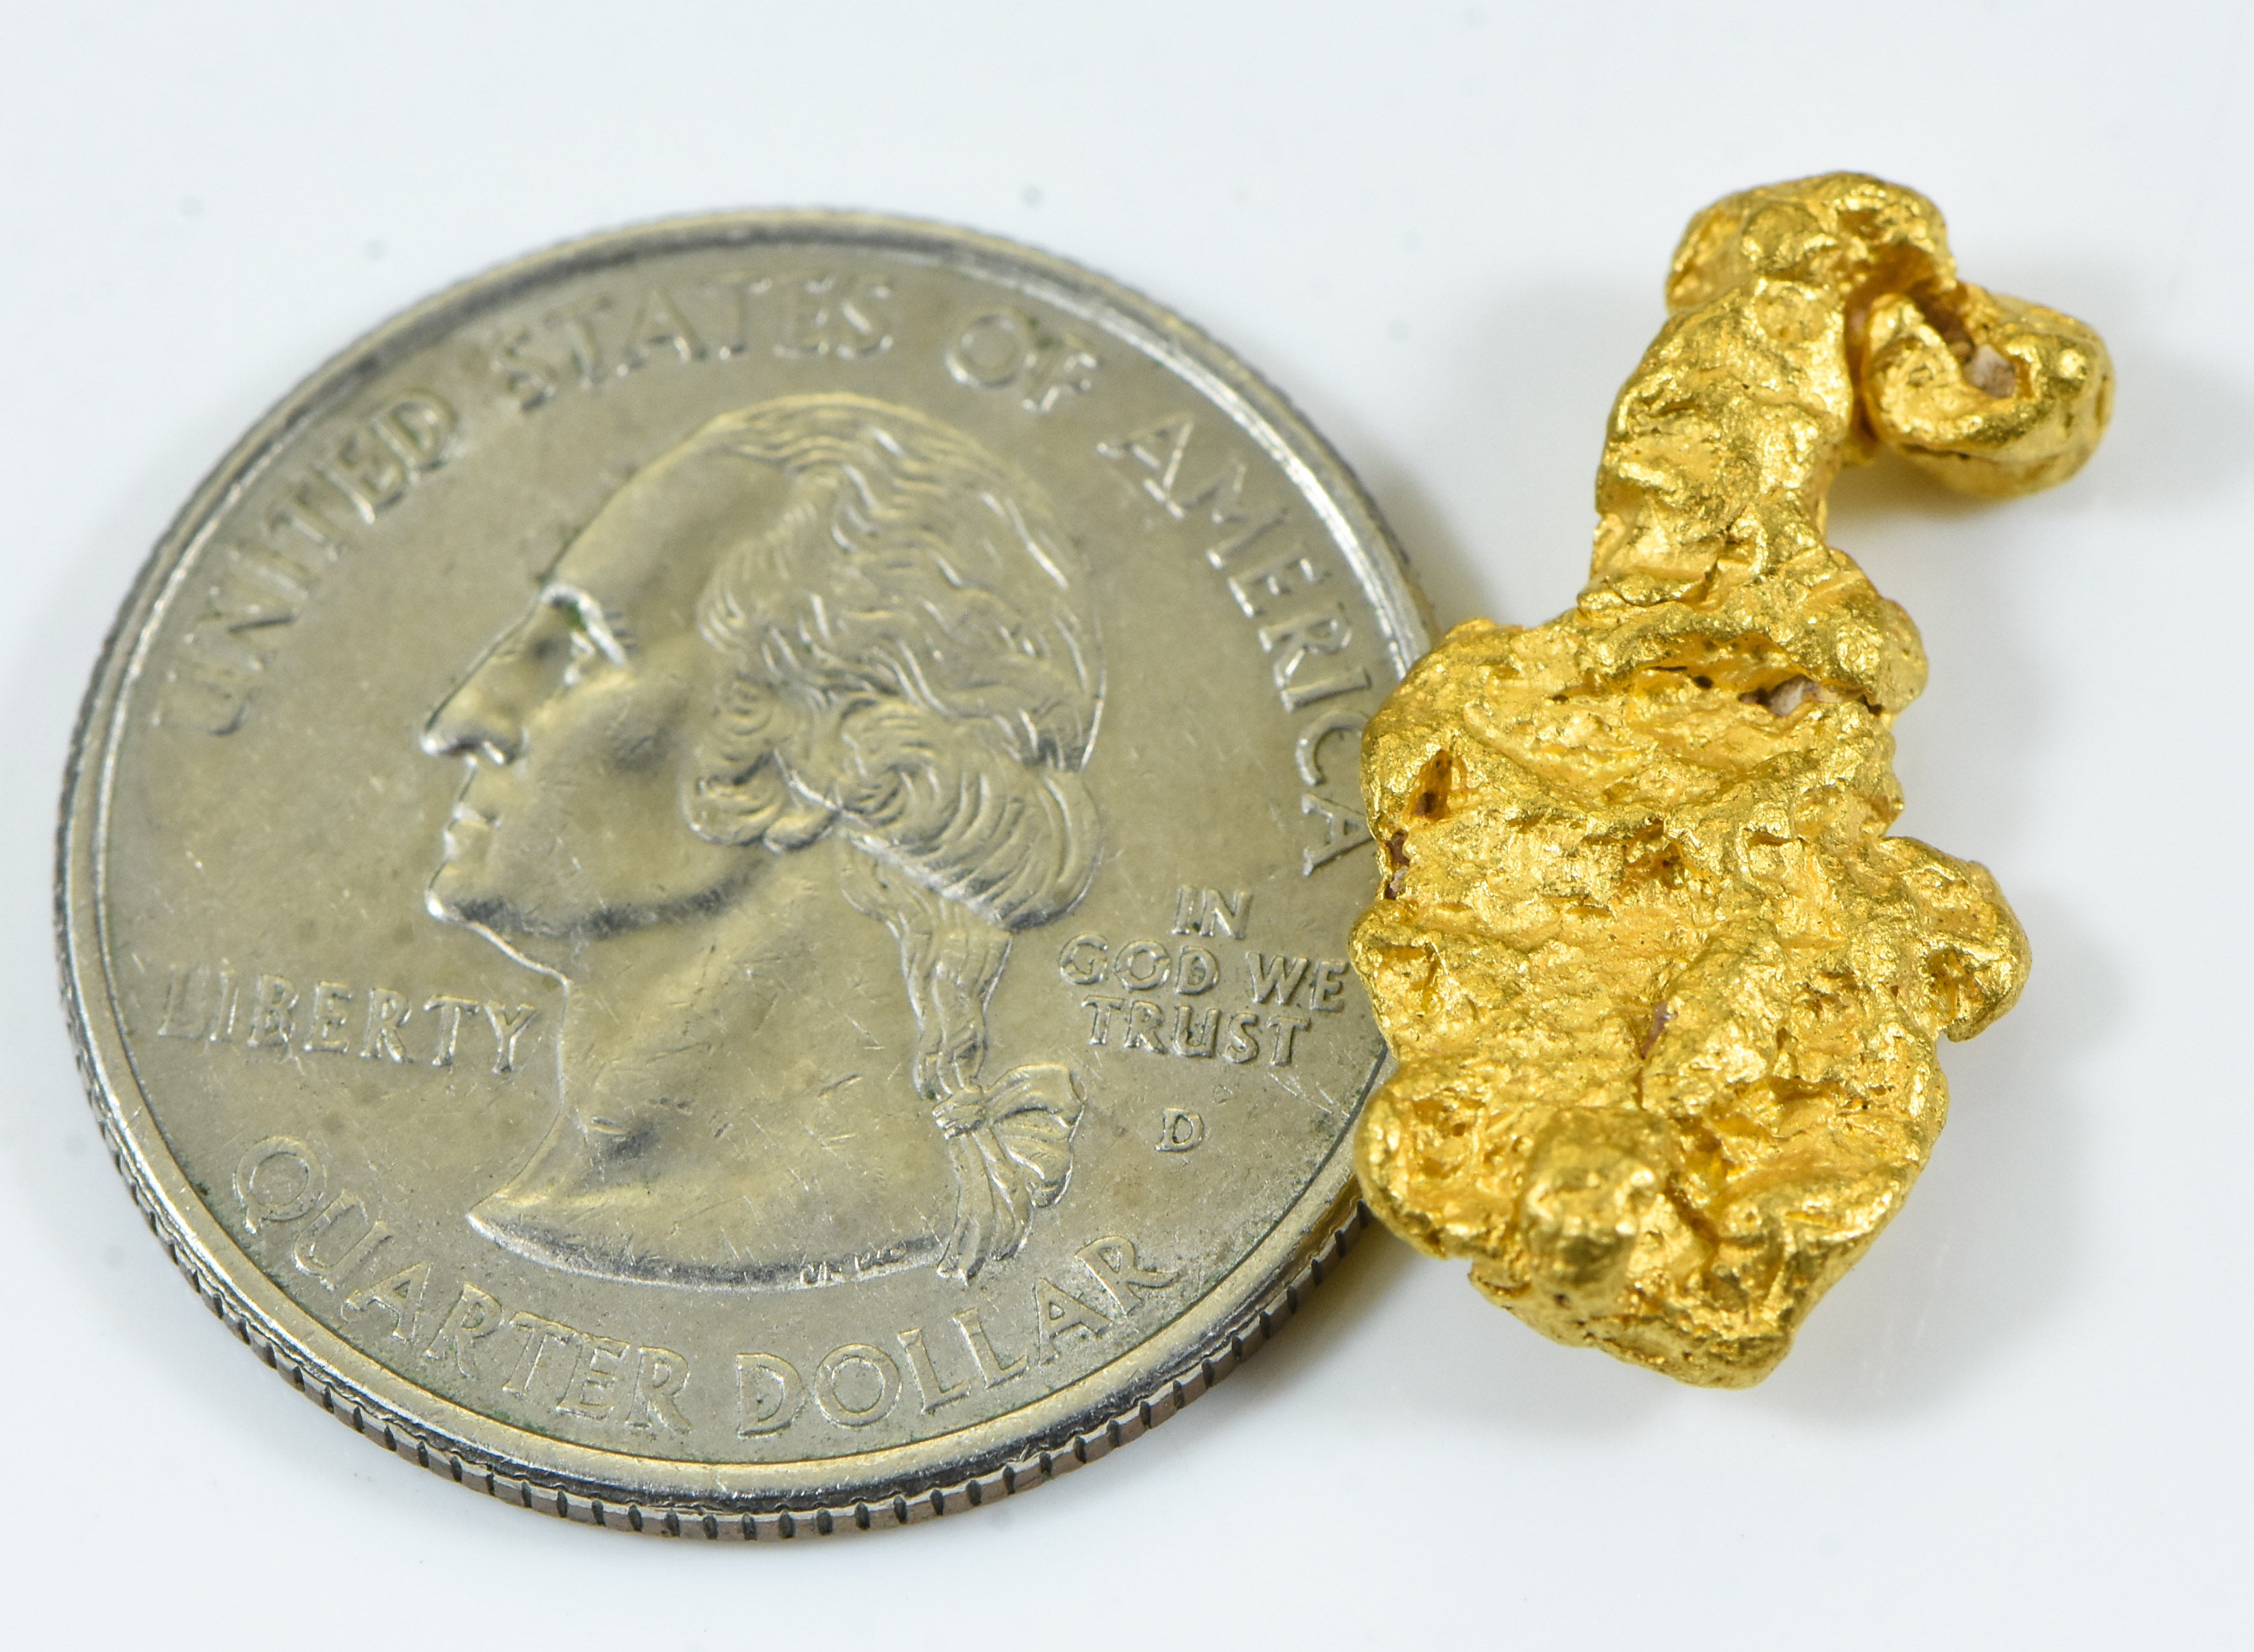 #1113 Natural Gold Nugget Australian 6.30 Grams Genuine